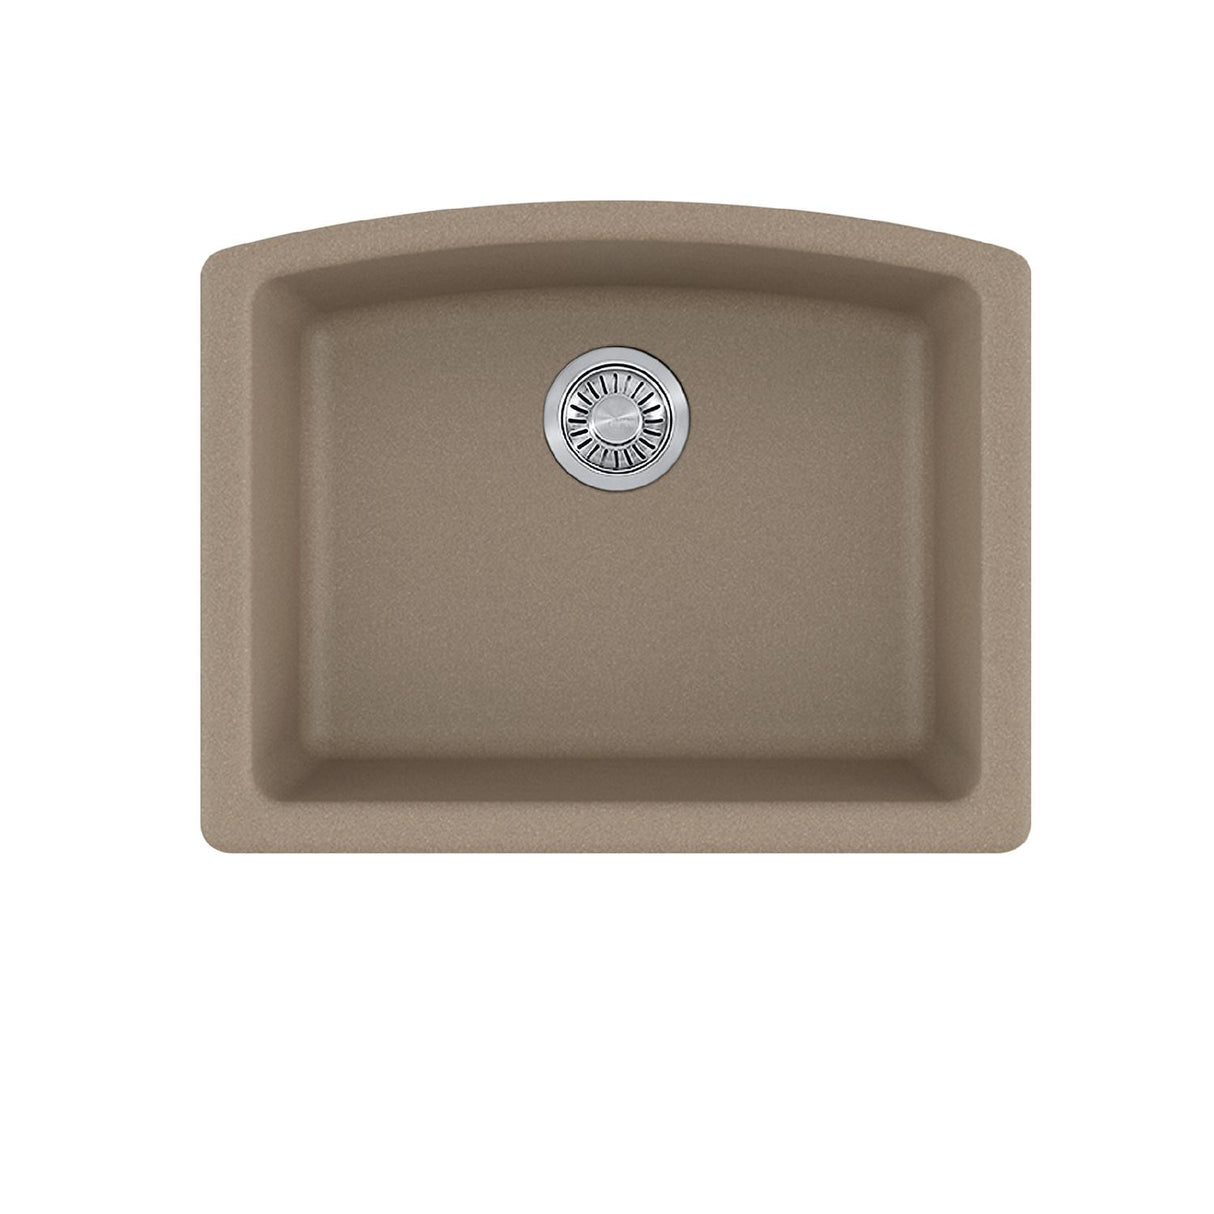 Franke ELG11022OYS Ellipse Granite Undermount Single Bowl Kitchen Sink, Oyster